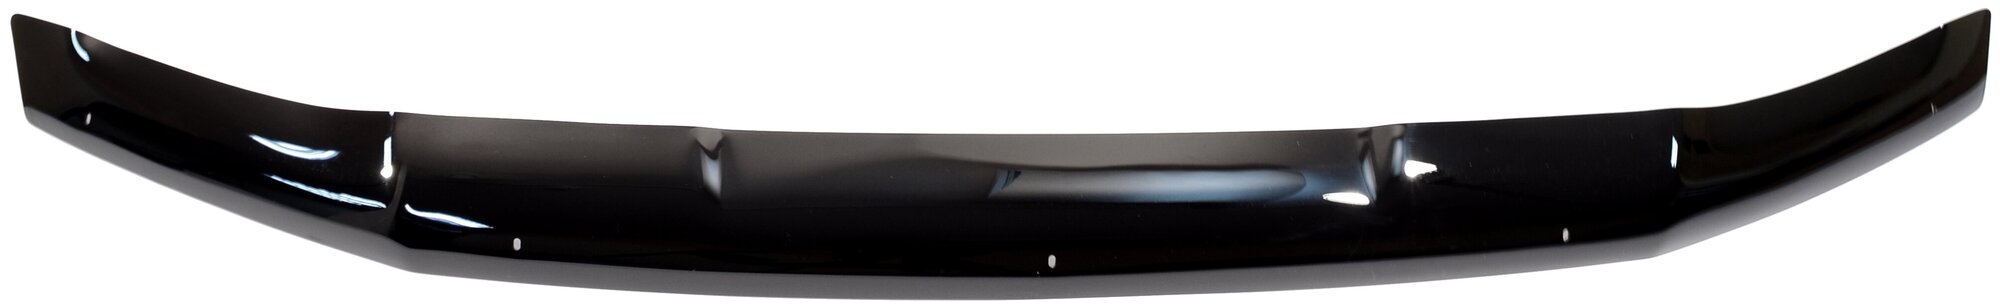 Дефлектор капота черный для Volkswagen Teramont (2017-2020)